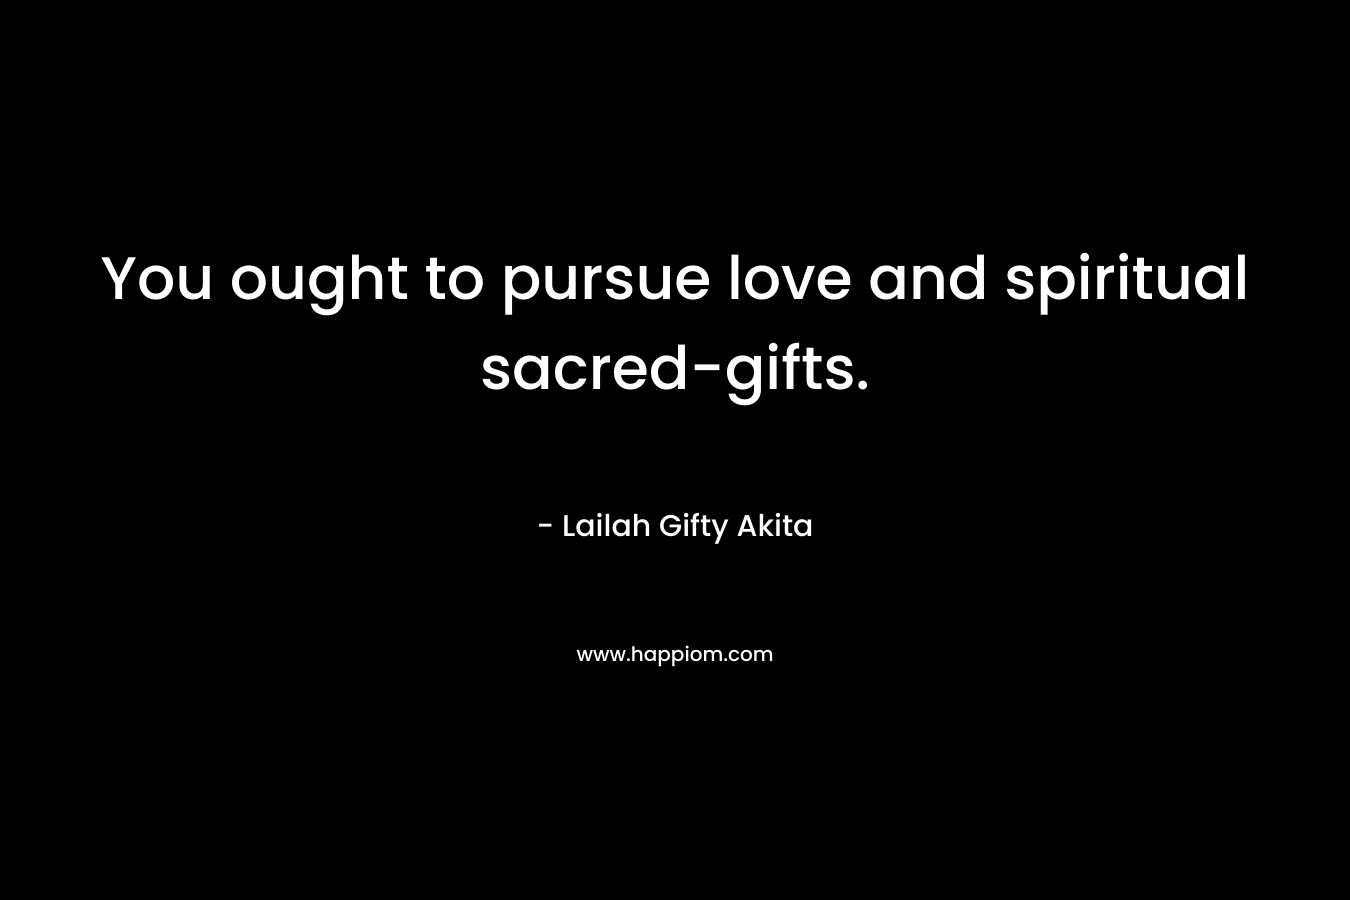 You ought to pursue love and spiritual sacred-gifts. – Lailah Gifty Akita